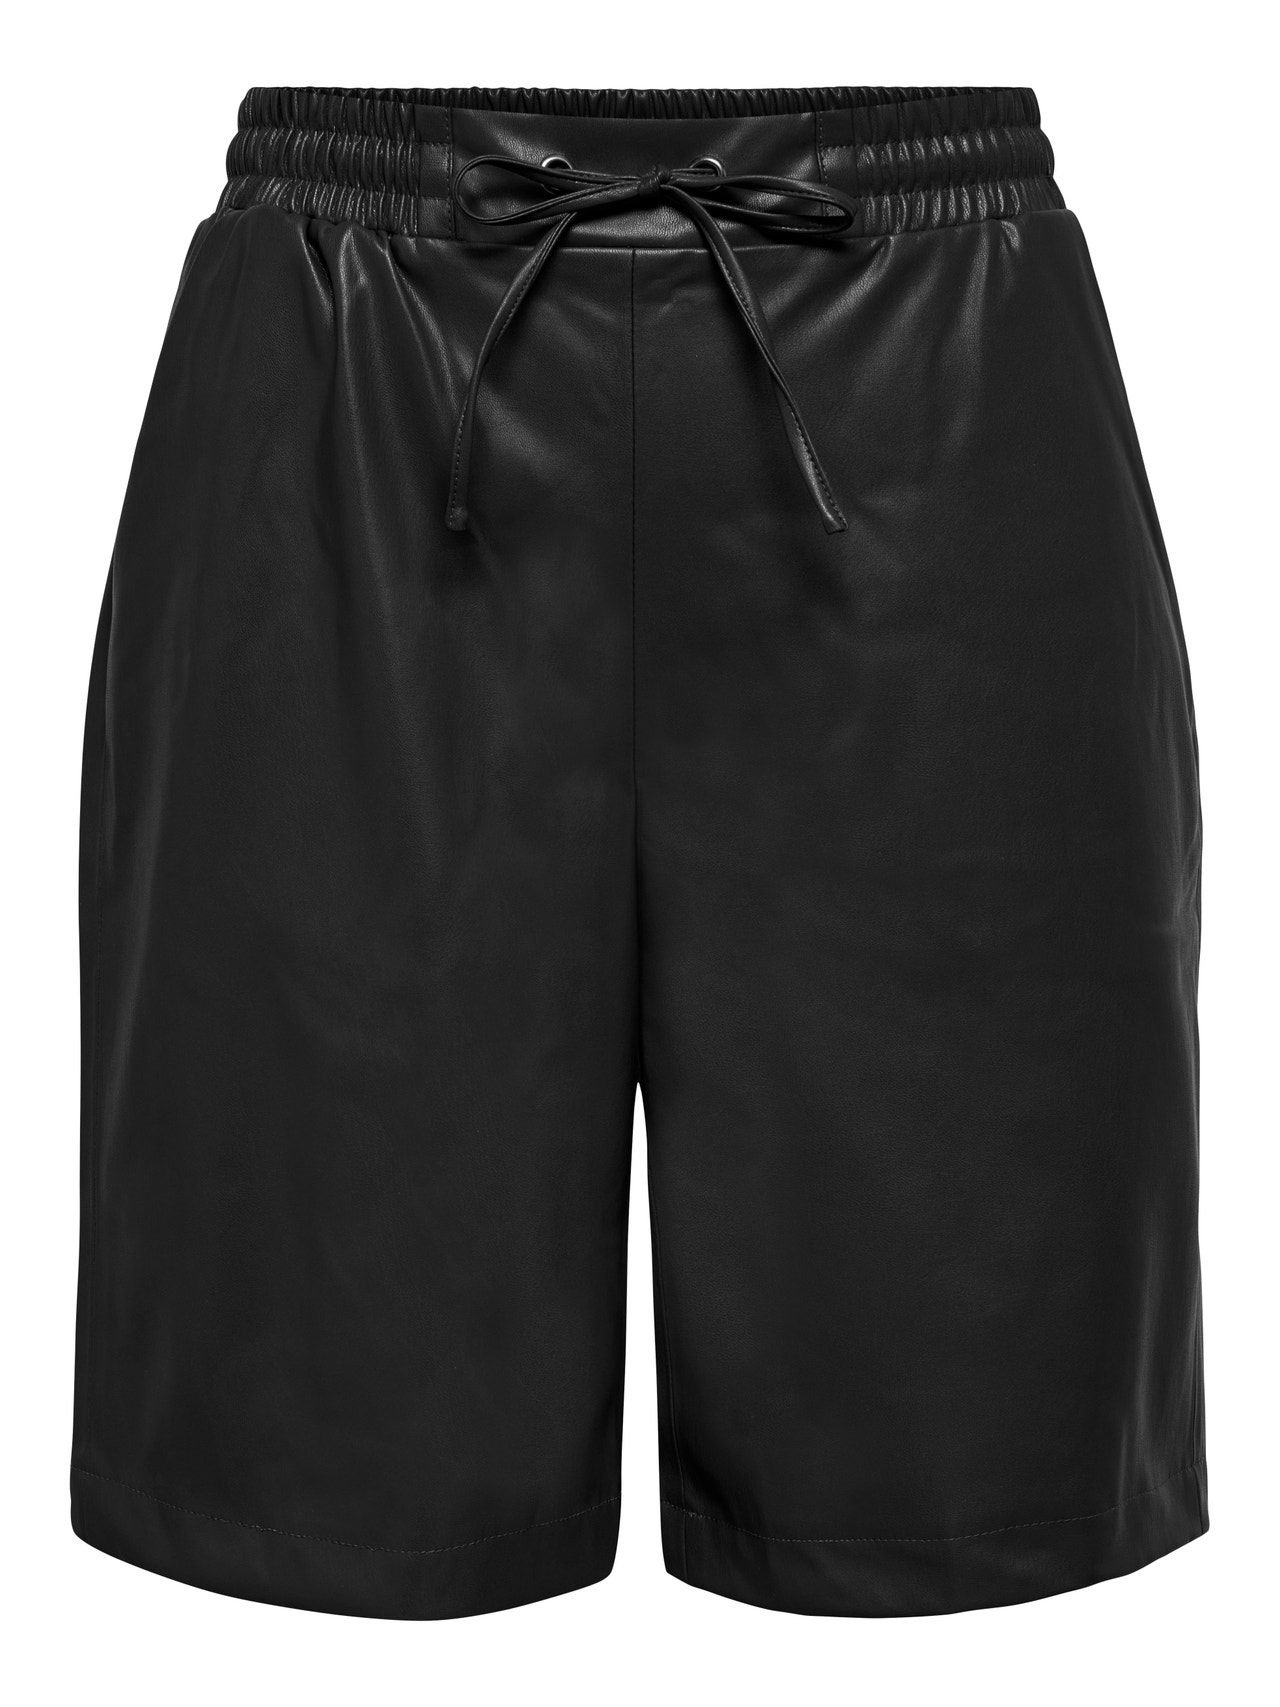 Black Leather Shorts, Leather Shorts, Leather, Shorts, Real Leather Shorts,  Women Leather Shorts, Small Shorts, Bermuda, Shorts Plus Size -  Norway